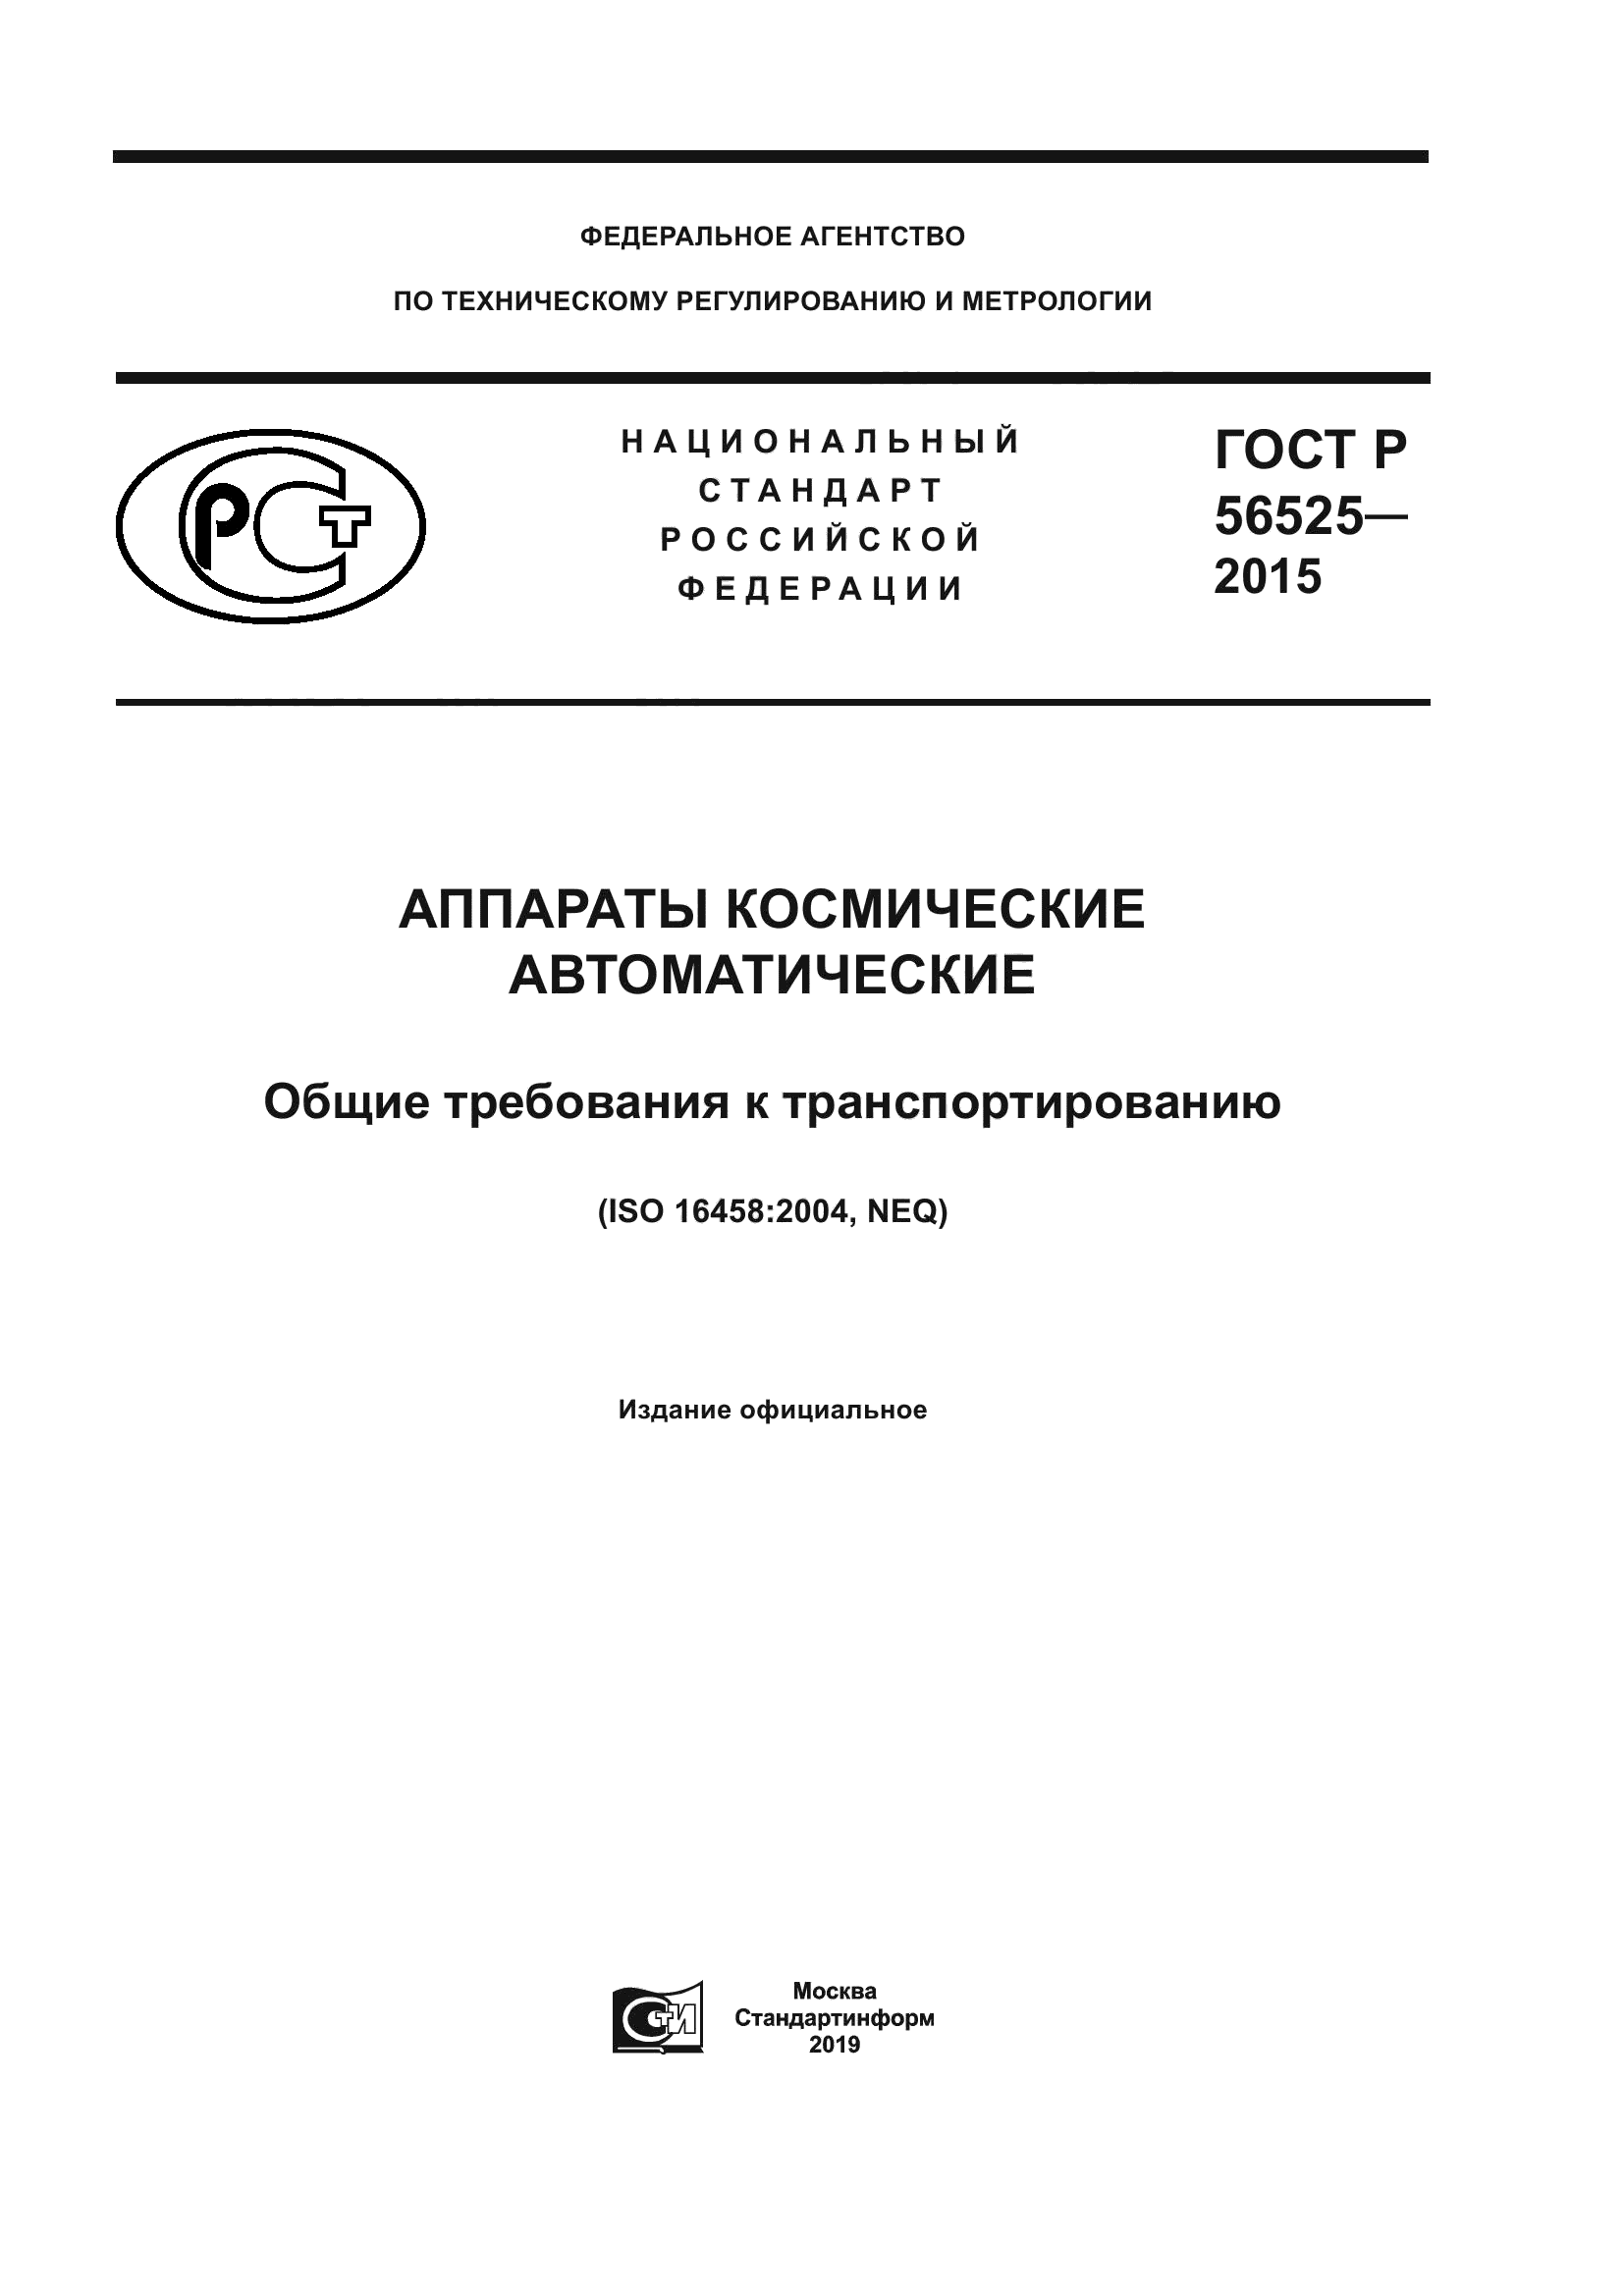 ГОСТ Р 56525-2015